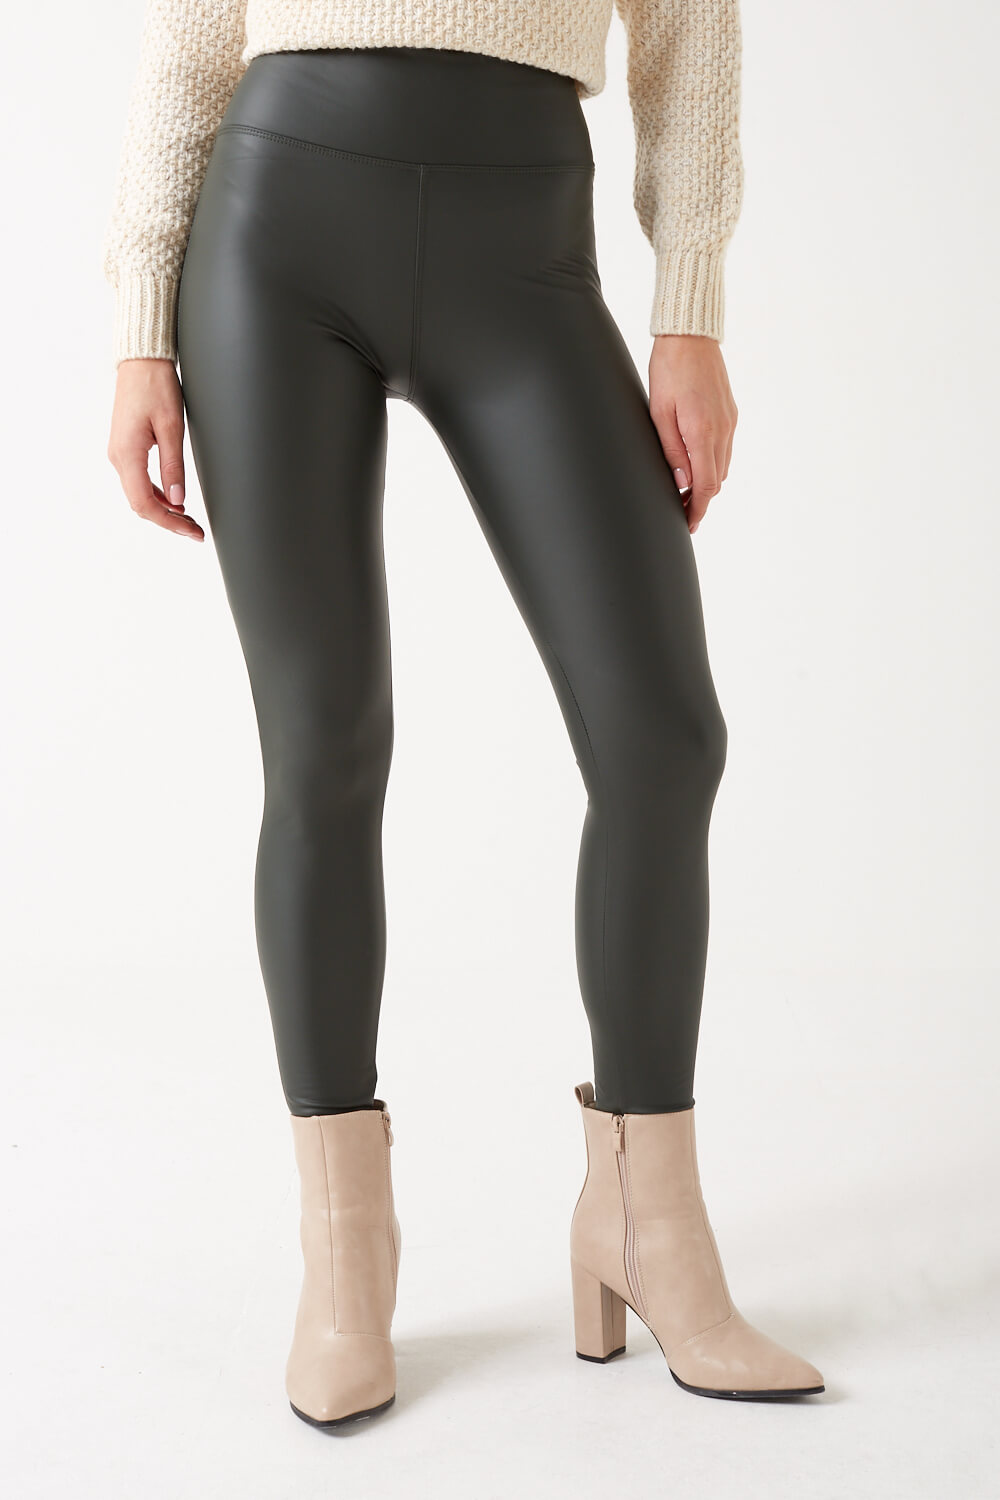 Olivia Mark – PU Leather High Waist Thermal Fleece Lined Leggings